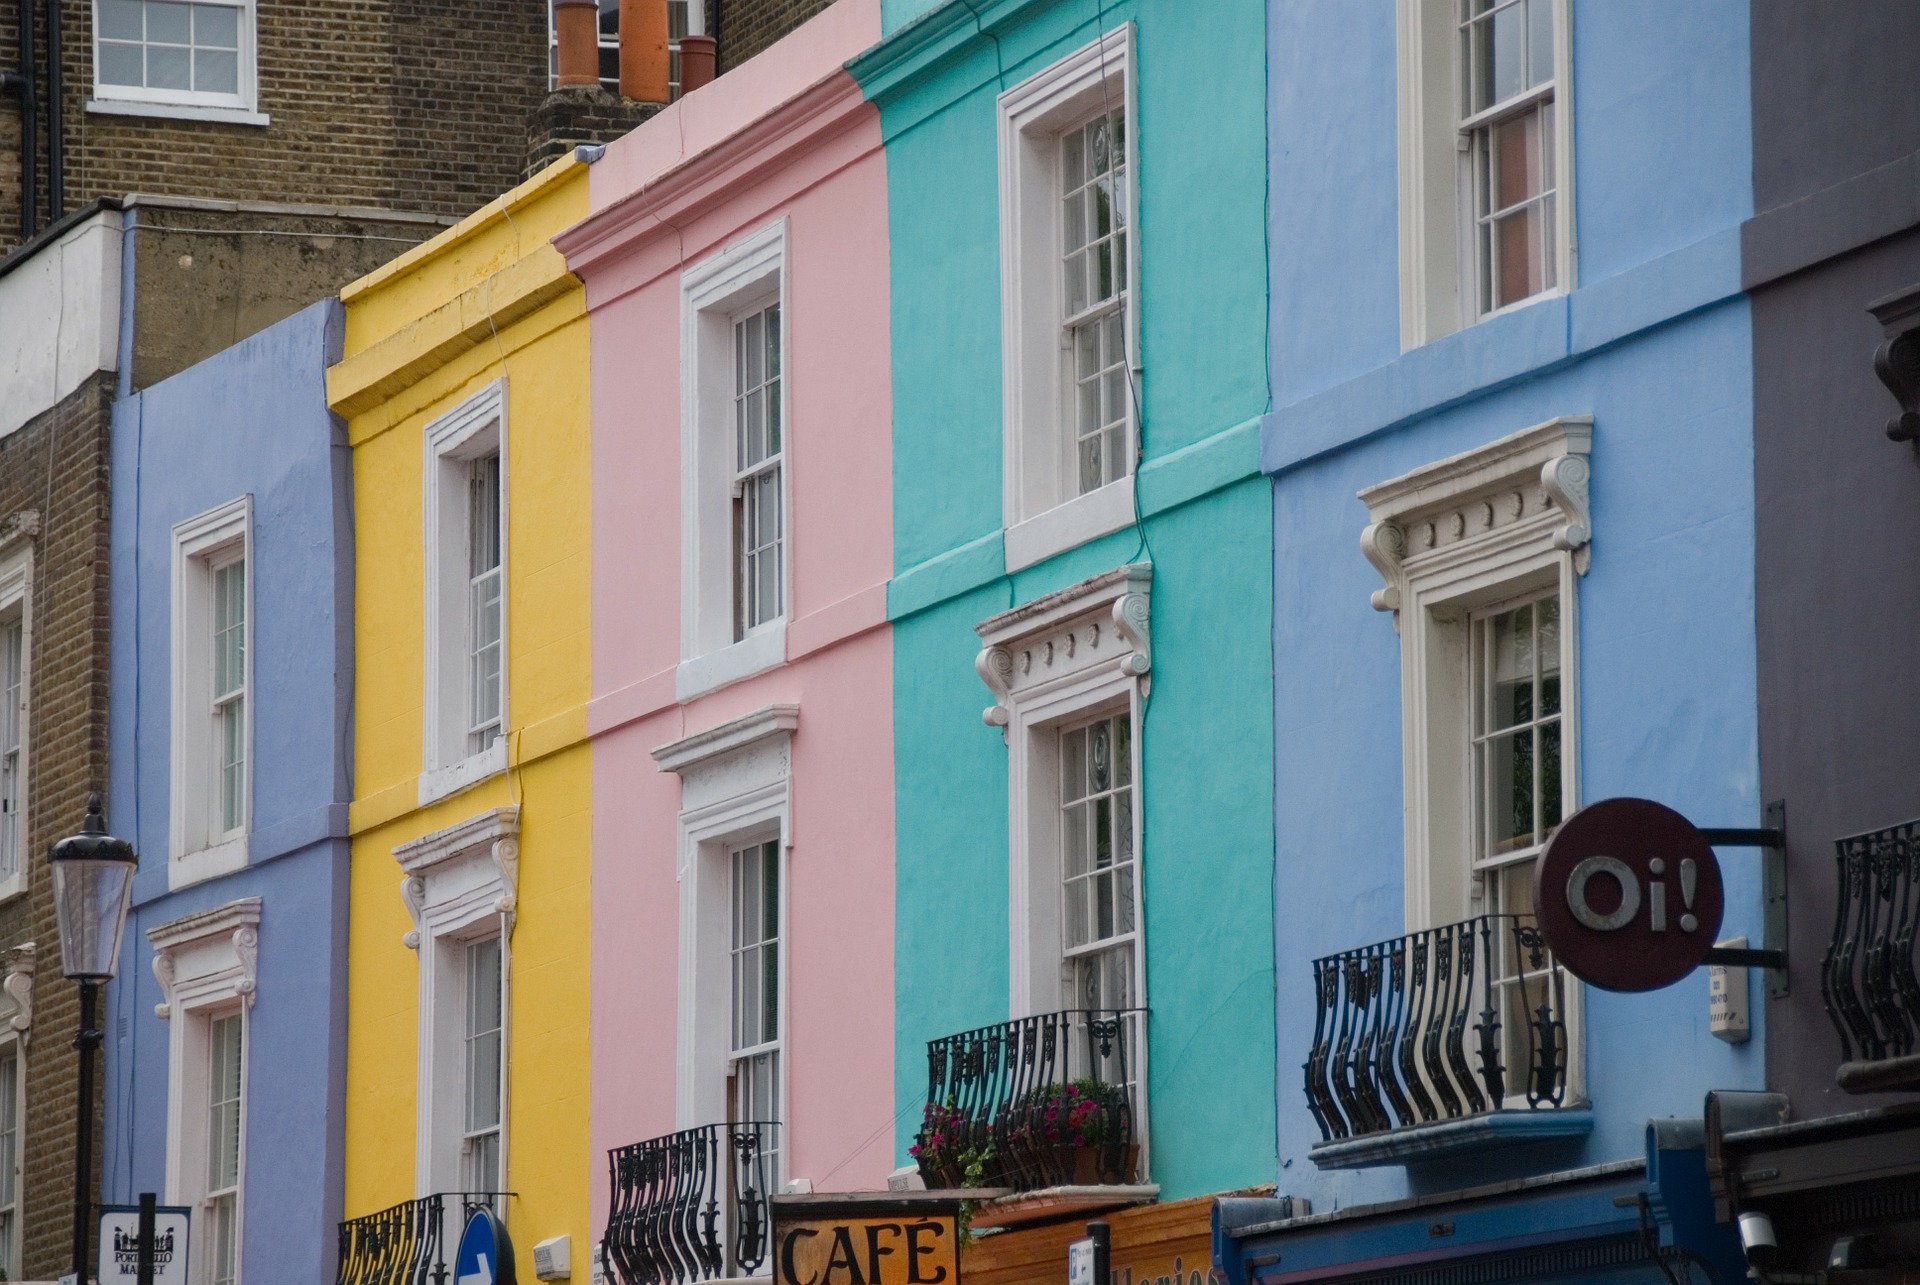 Portobello公路市场，柔和的彩色房屋，诺丁山 - 伦敦在春天旅行指南 -  Illumelation.combeplay3体育官方下载